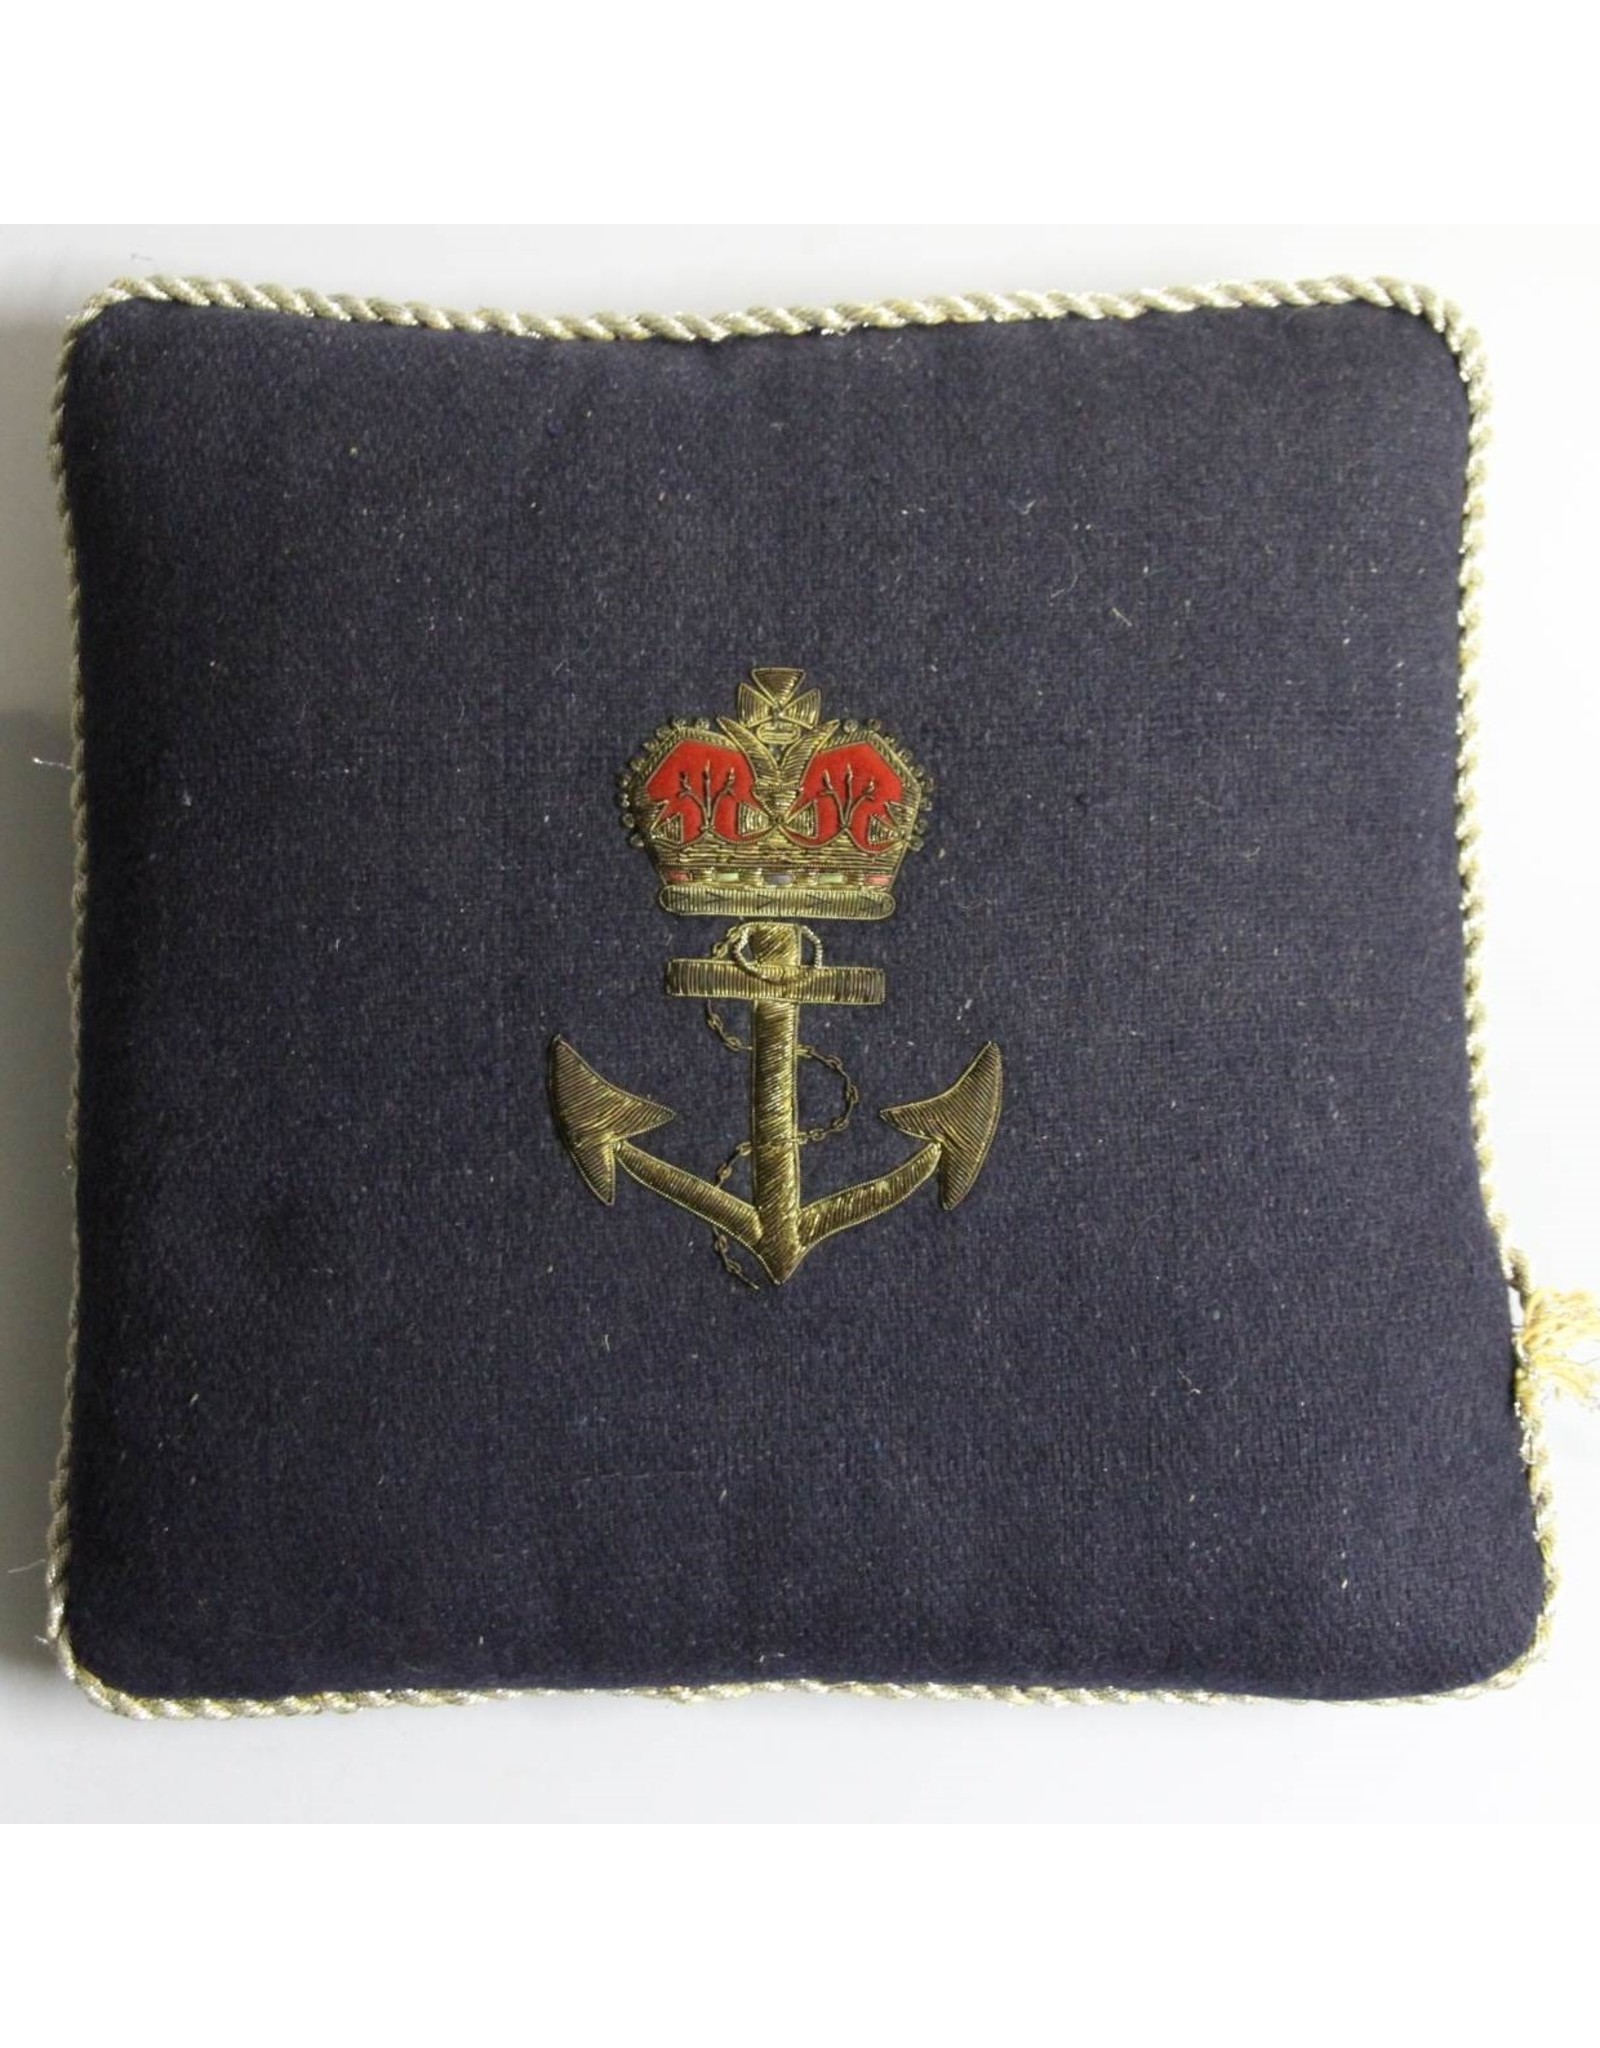 Sweetheart pillow - Royal Navy bullion wire cushion